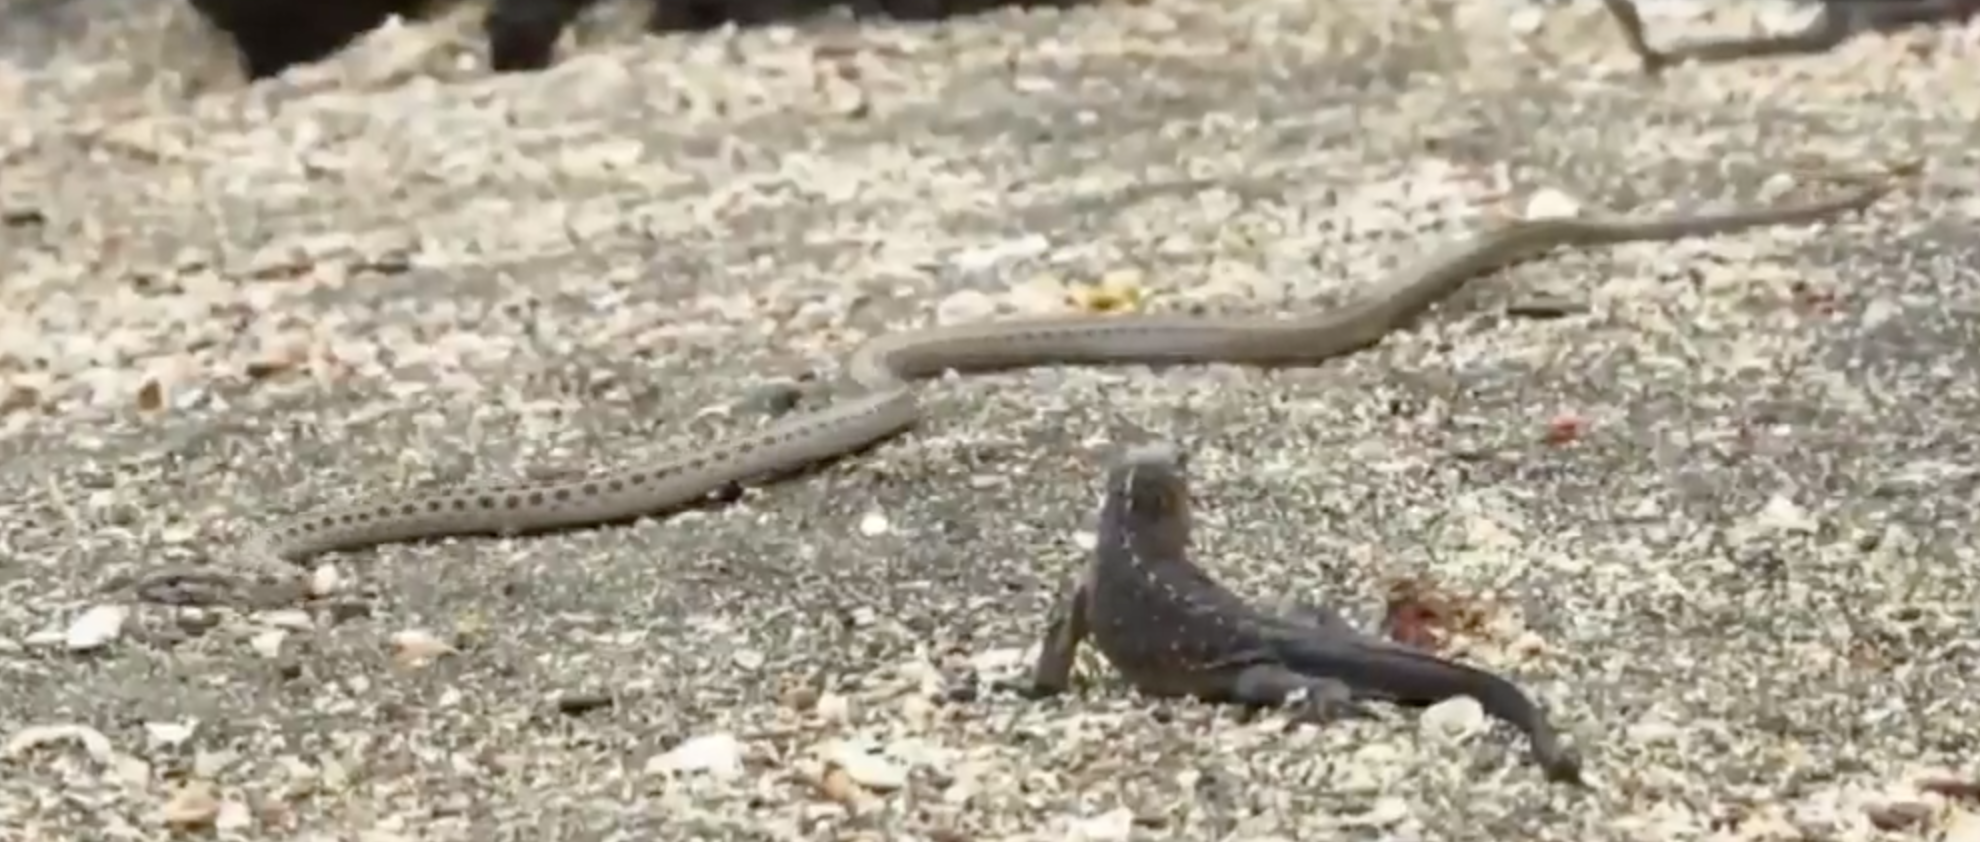 Esta iguana interpreta la mejor escena de vida animal jamás filmada